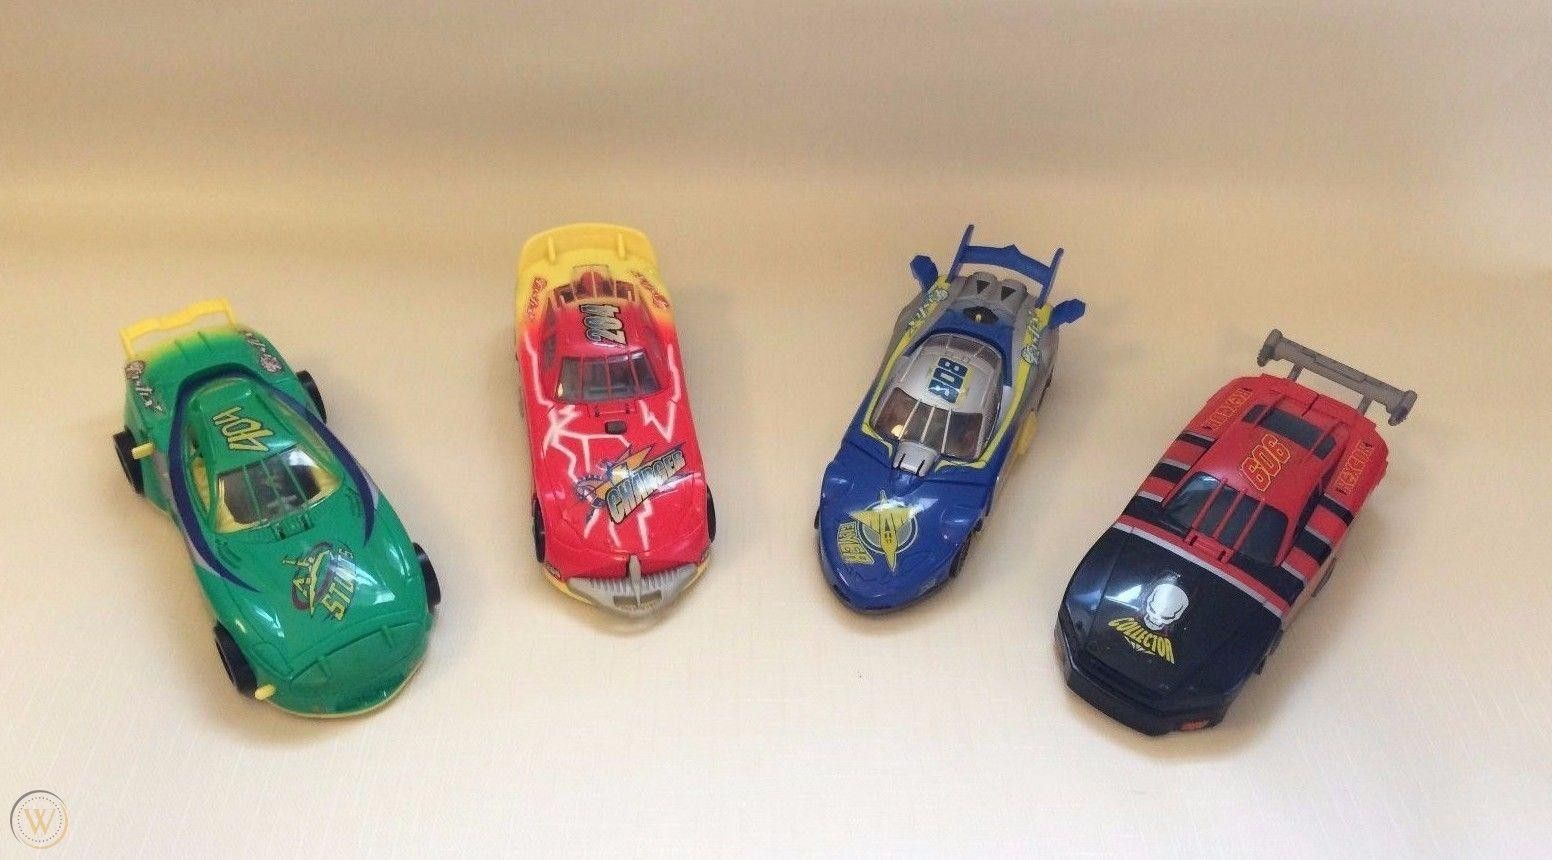 disney pixar cars toys target